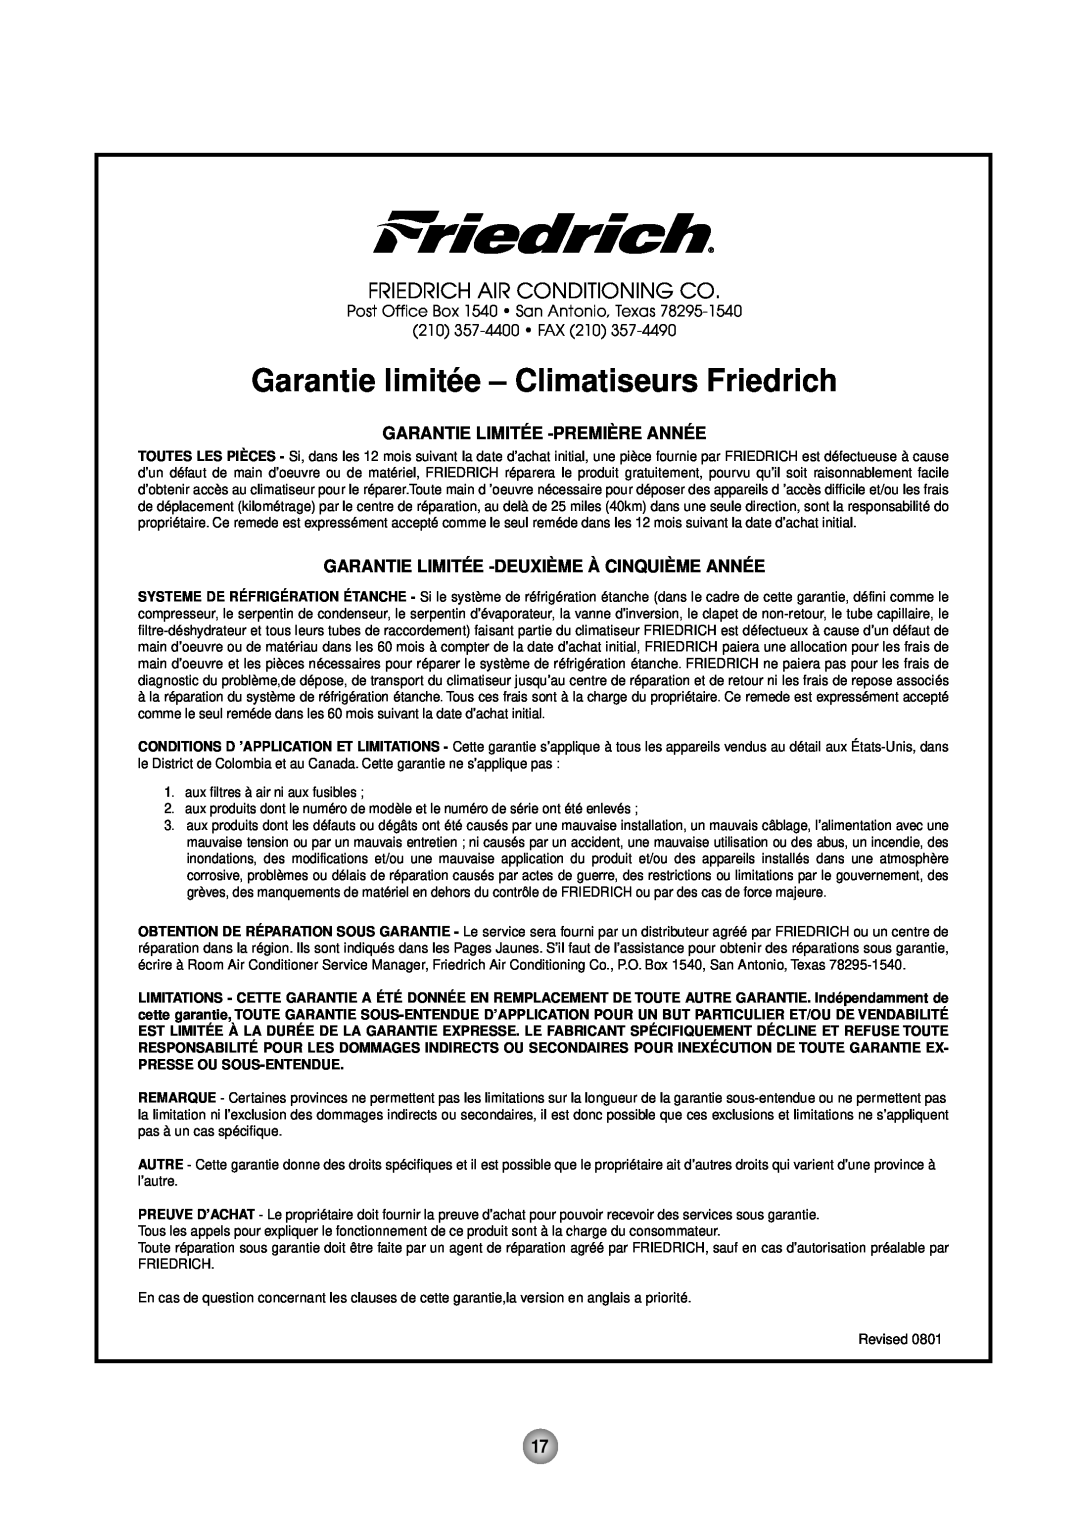 Friedrich CP12, CP10 Garantie limité e - Climatiseurs Friedrich, Friedrich Air Conditioning Co, 210 357-4400 FAX 